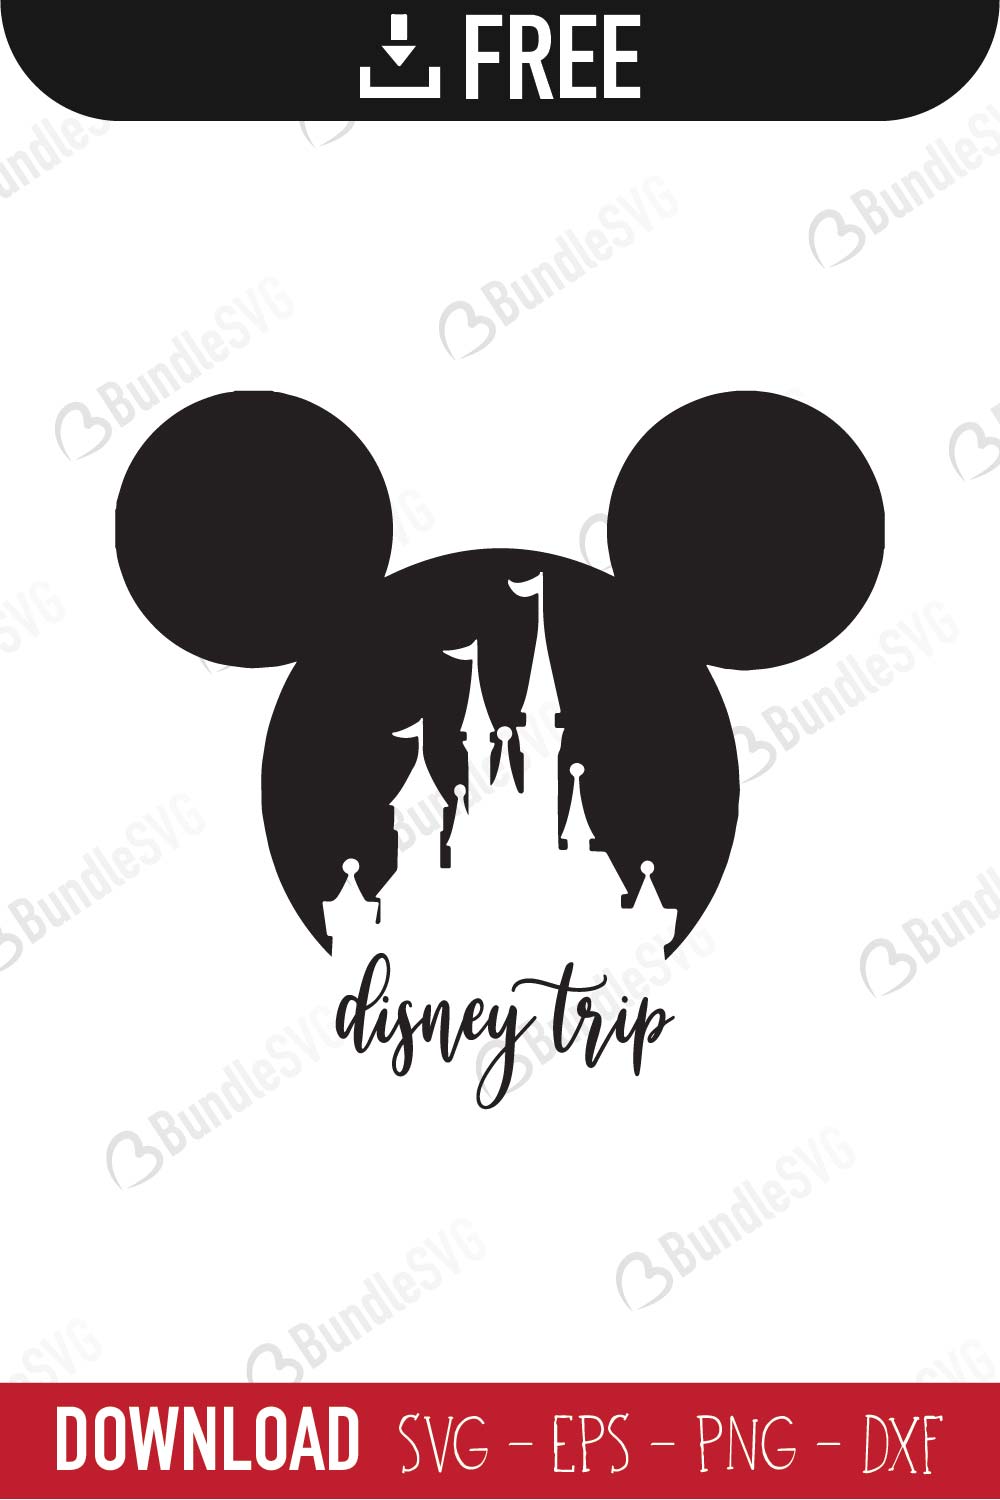 Disney Trip SVG Files Download | BundleSVG